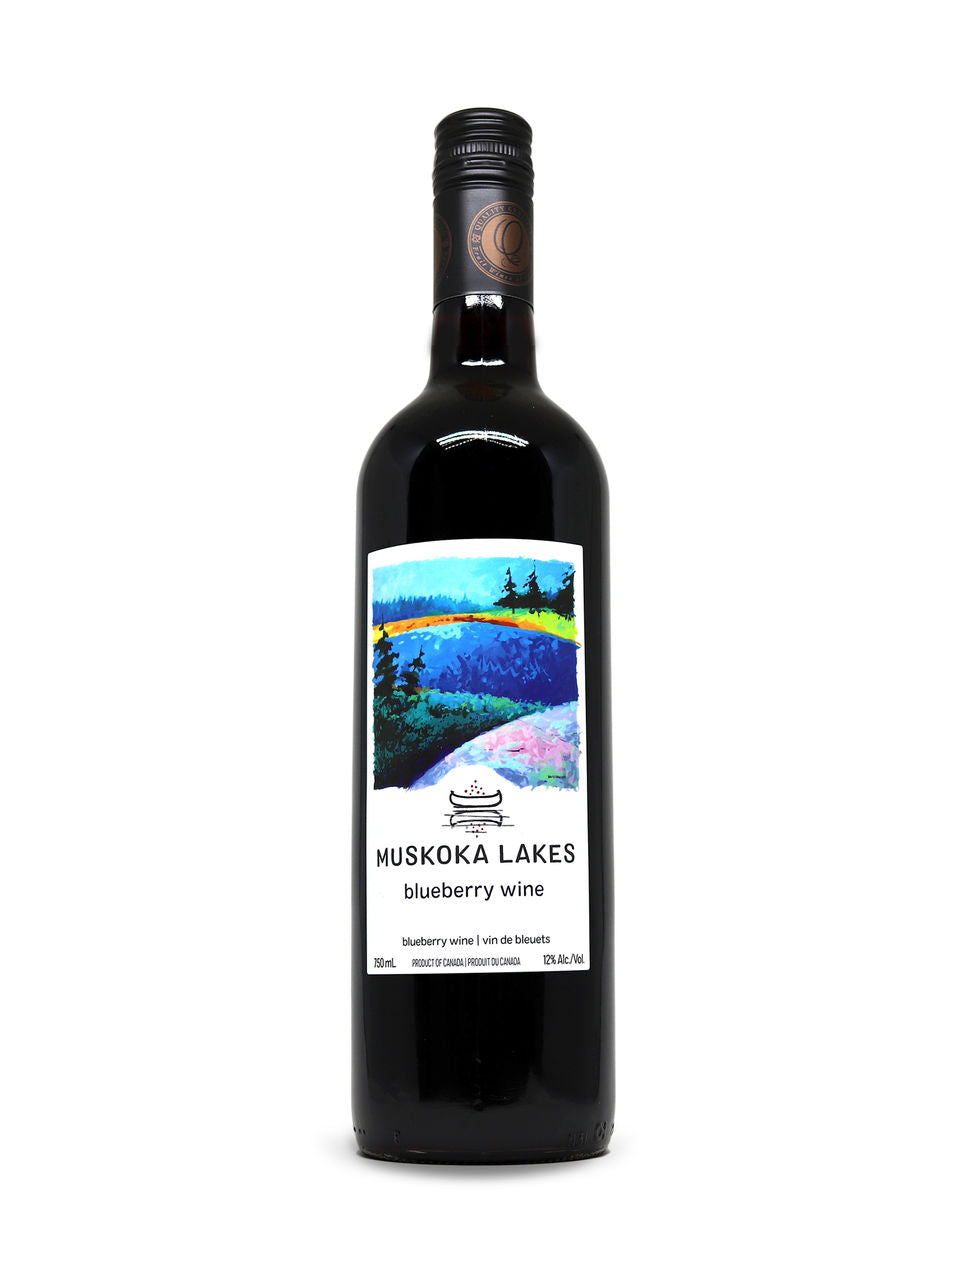 Muskoka Lakes Blueberry Wine 750 mL bottle